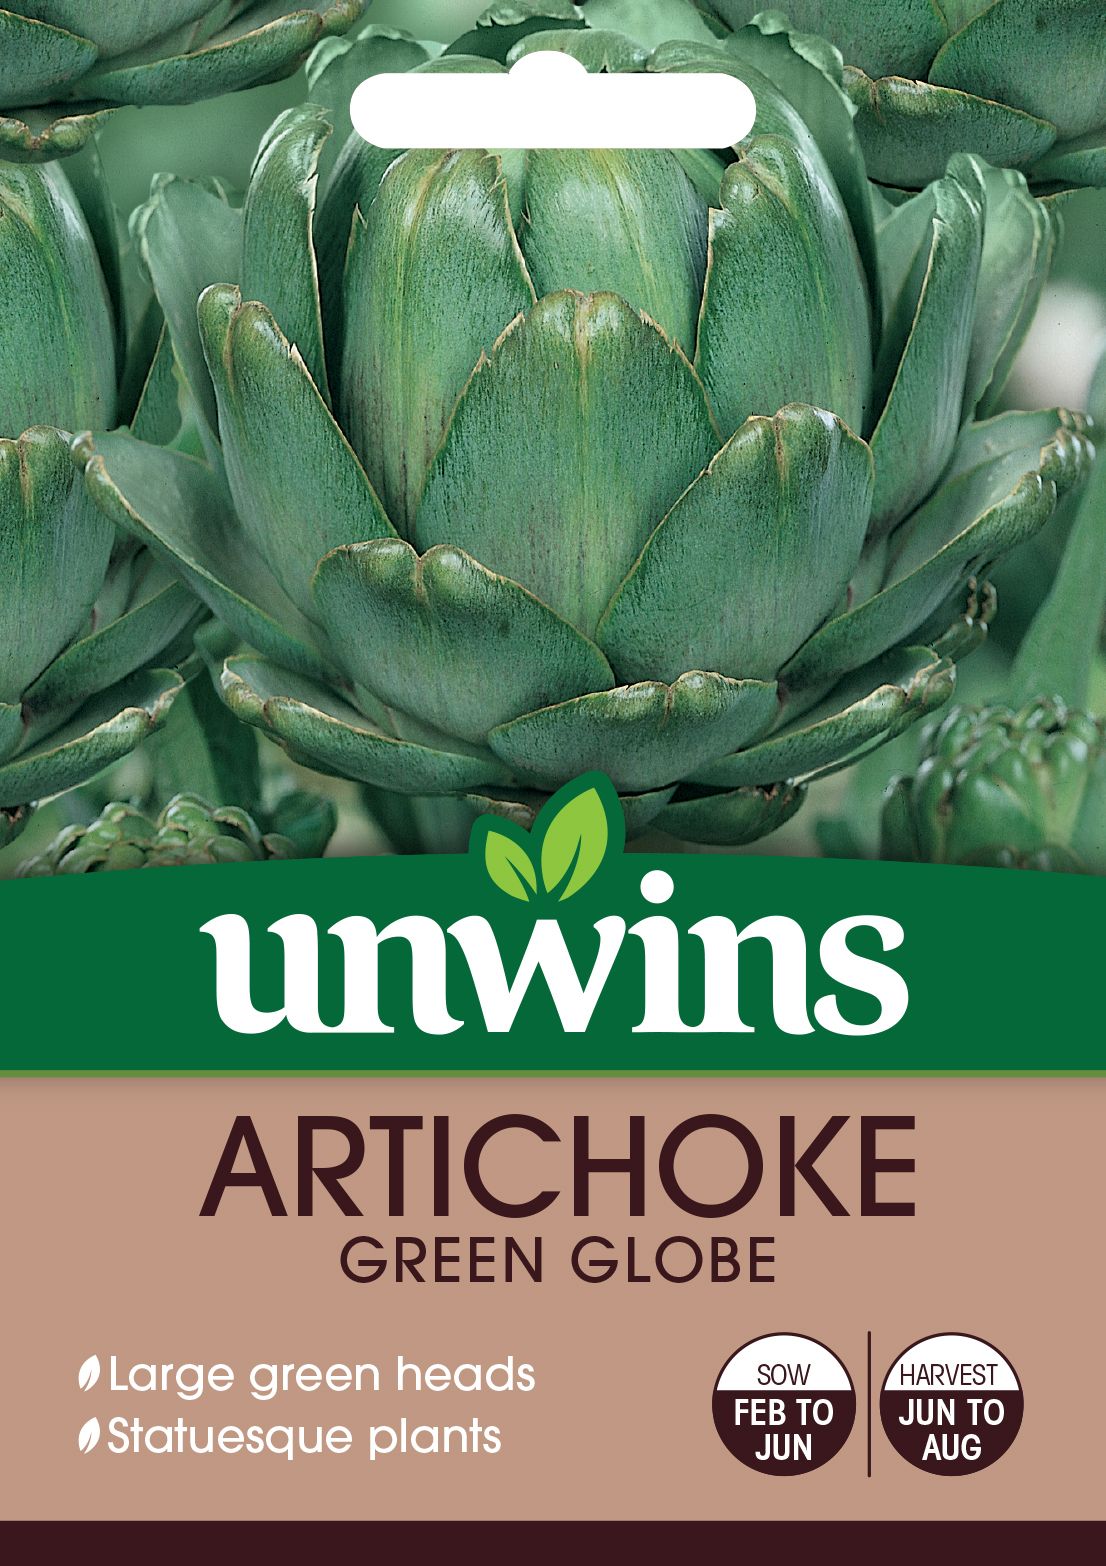 Artichoke Green Globe